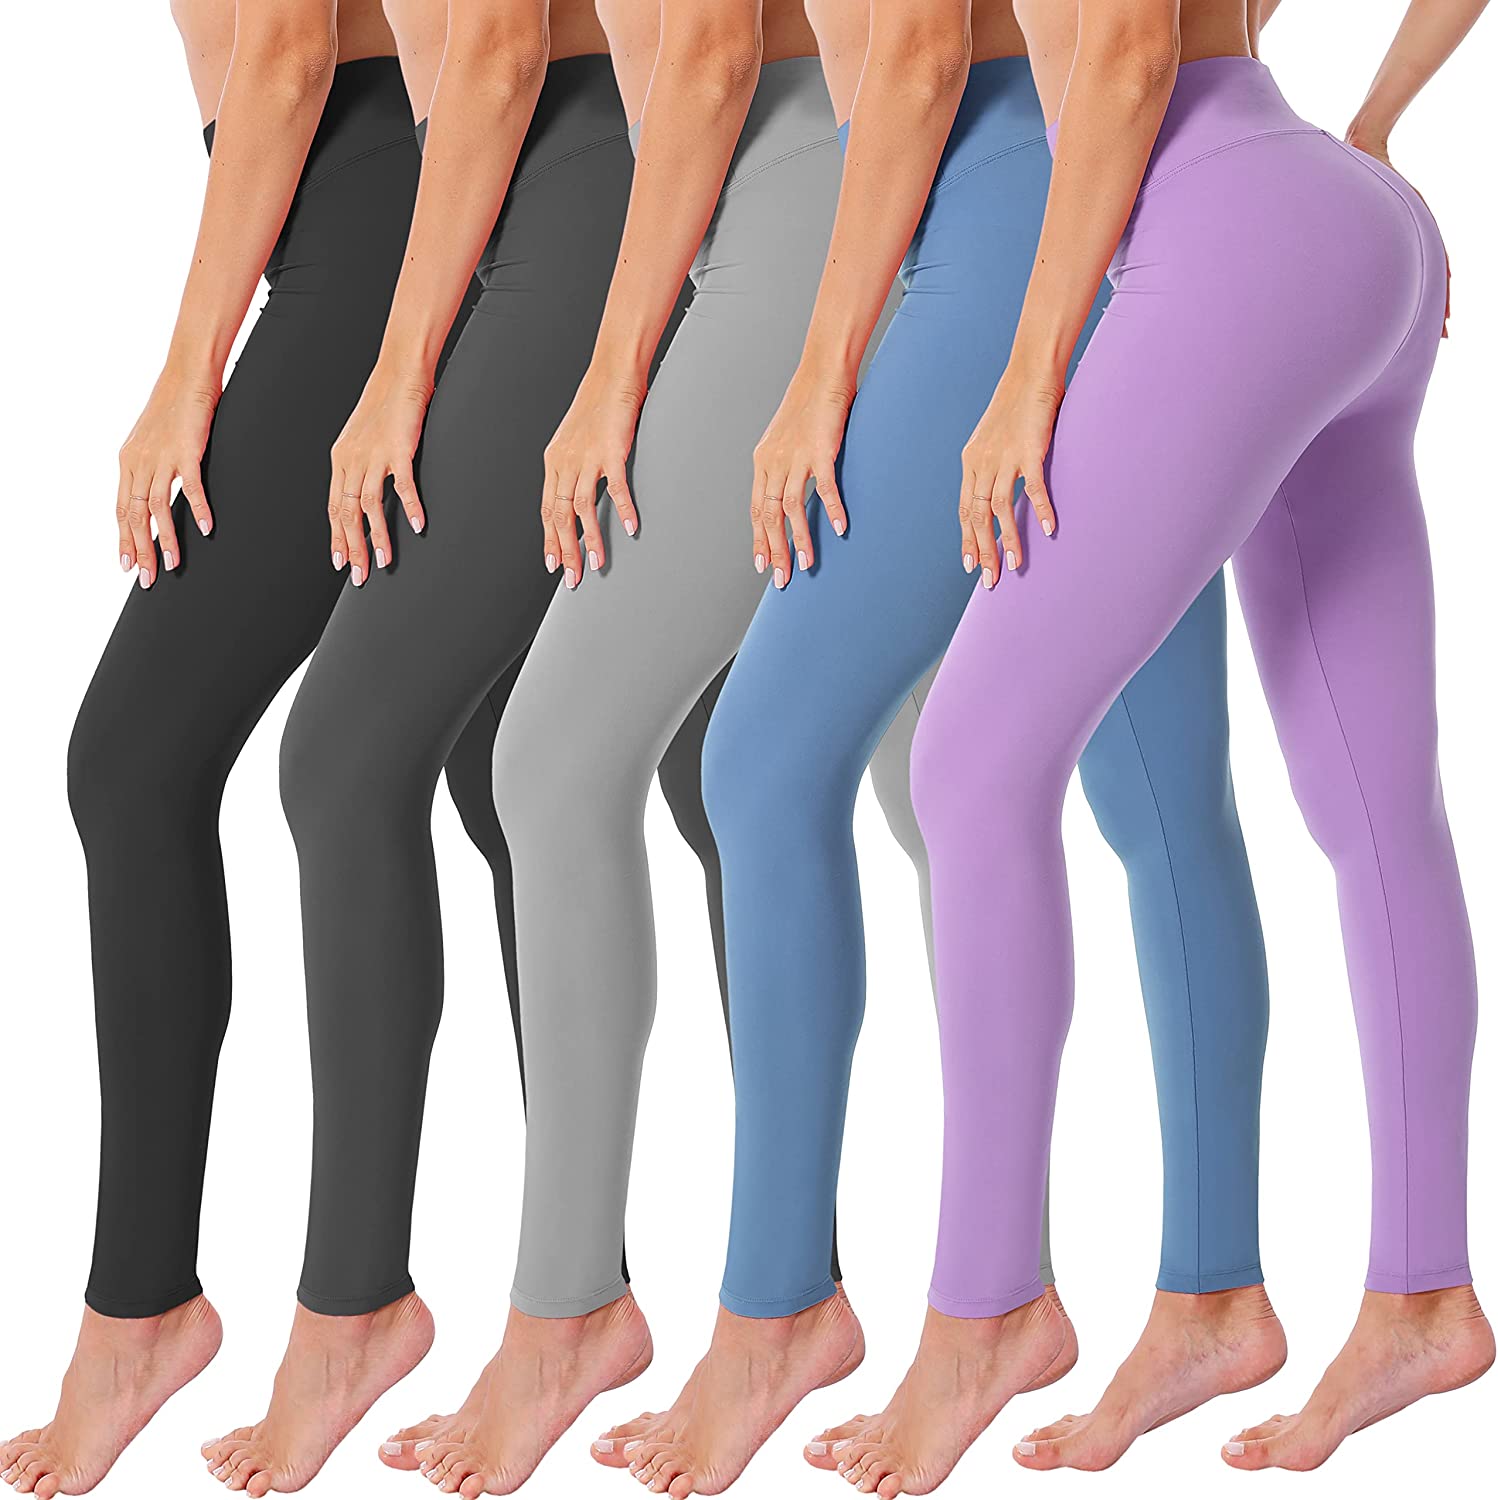  VALANDY Women's High Waist Tummy Control Yoga Pants Workout Running  Sports Tights Leggings Black One Size : VALANDY: Sports & Outdoors